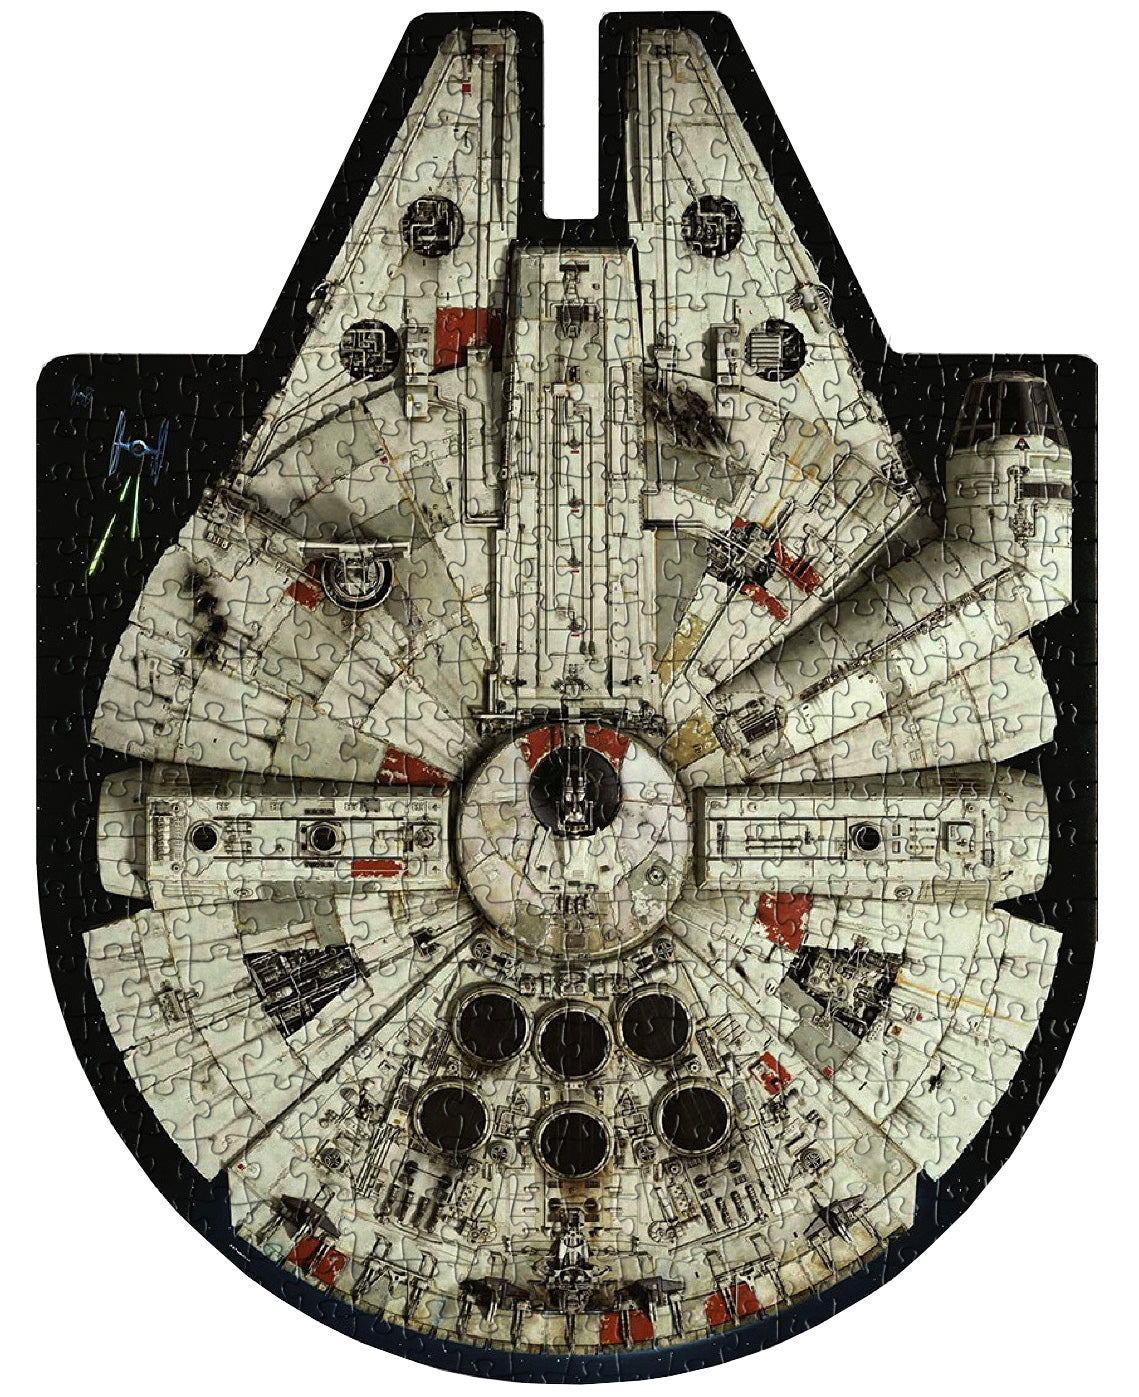 1000-piece Star Wars Millennium Falcon Double-Sided Jigsaw Puzzle